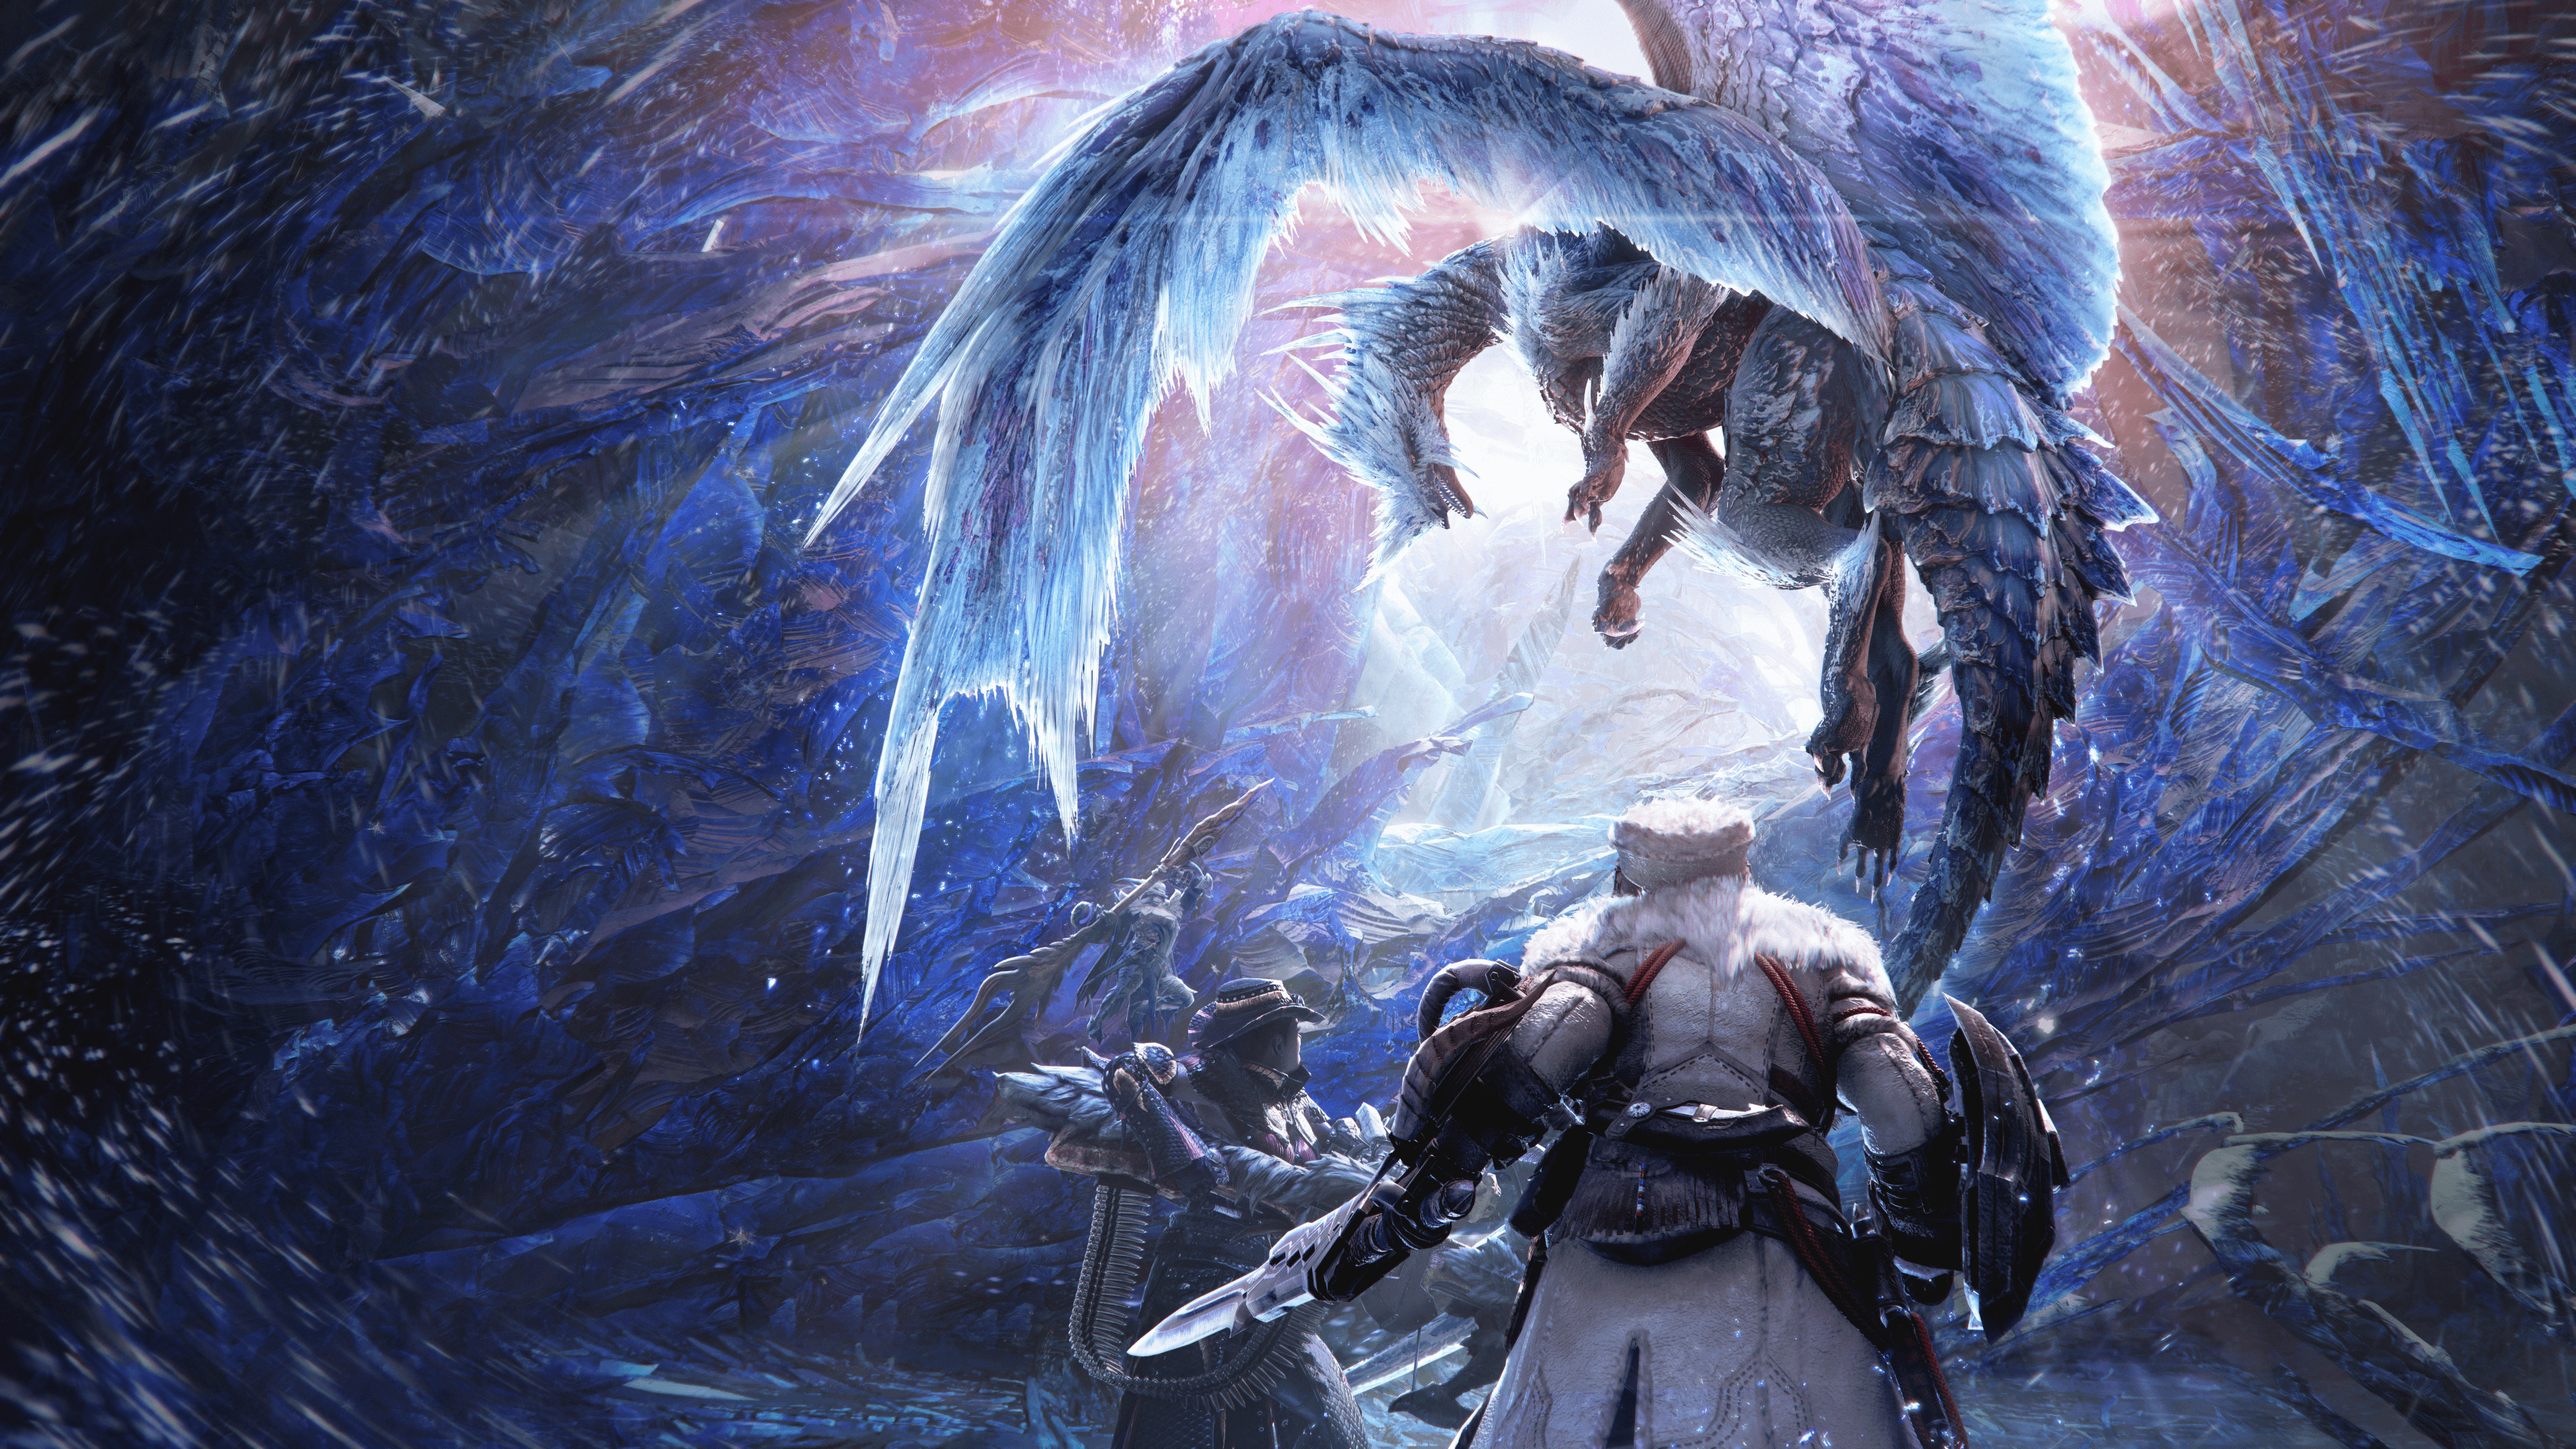 Ice Dragon, Gaming wallpapers, Power of ice, Dragon artwork, 3840x2160 4K Desktop